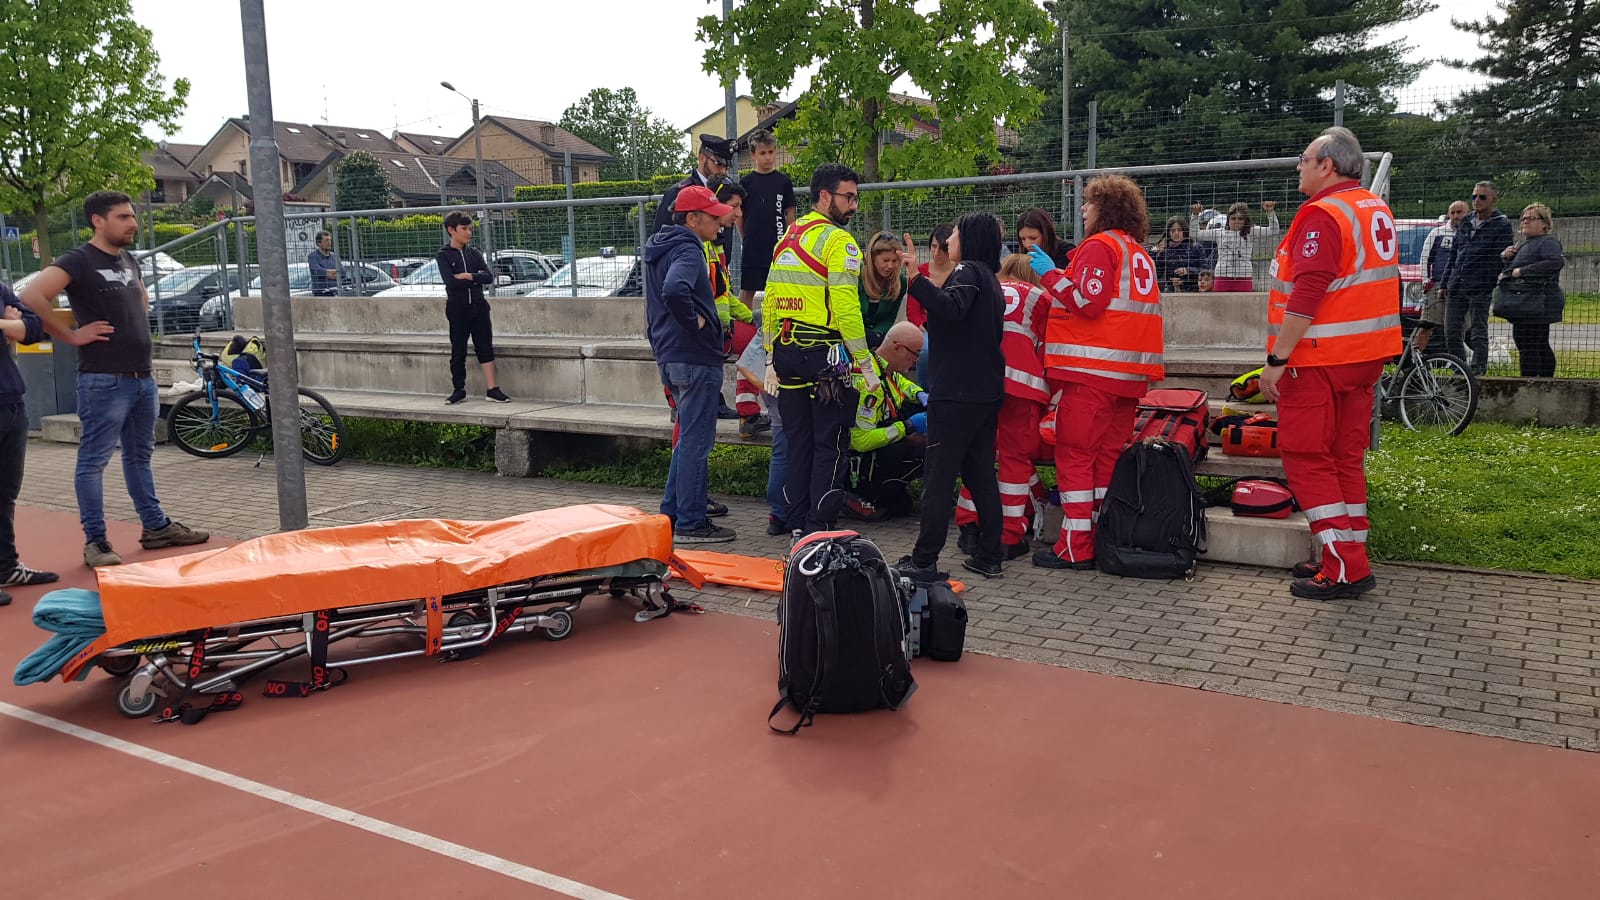 Correzzana bimbo caduto da bici a centro sportivo soccorso con elisoccorso